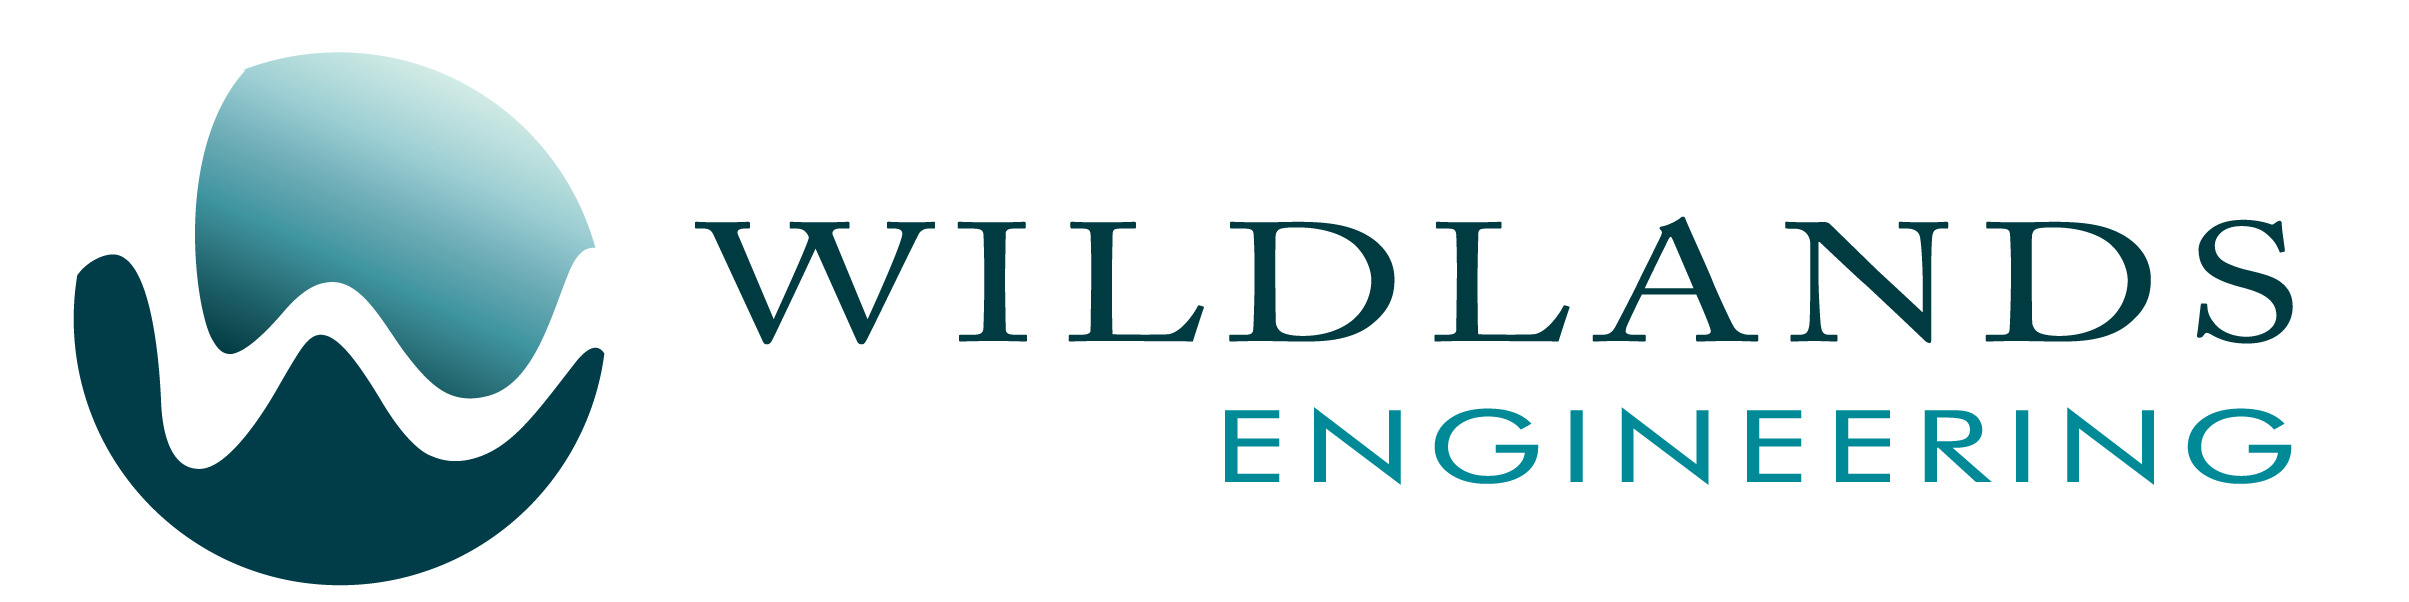 Wildlands Engineering Seeks Project Manager/Water Resources Engineer